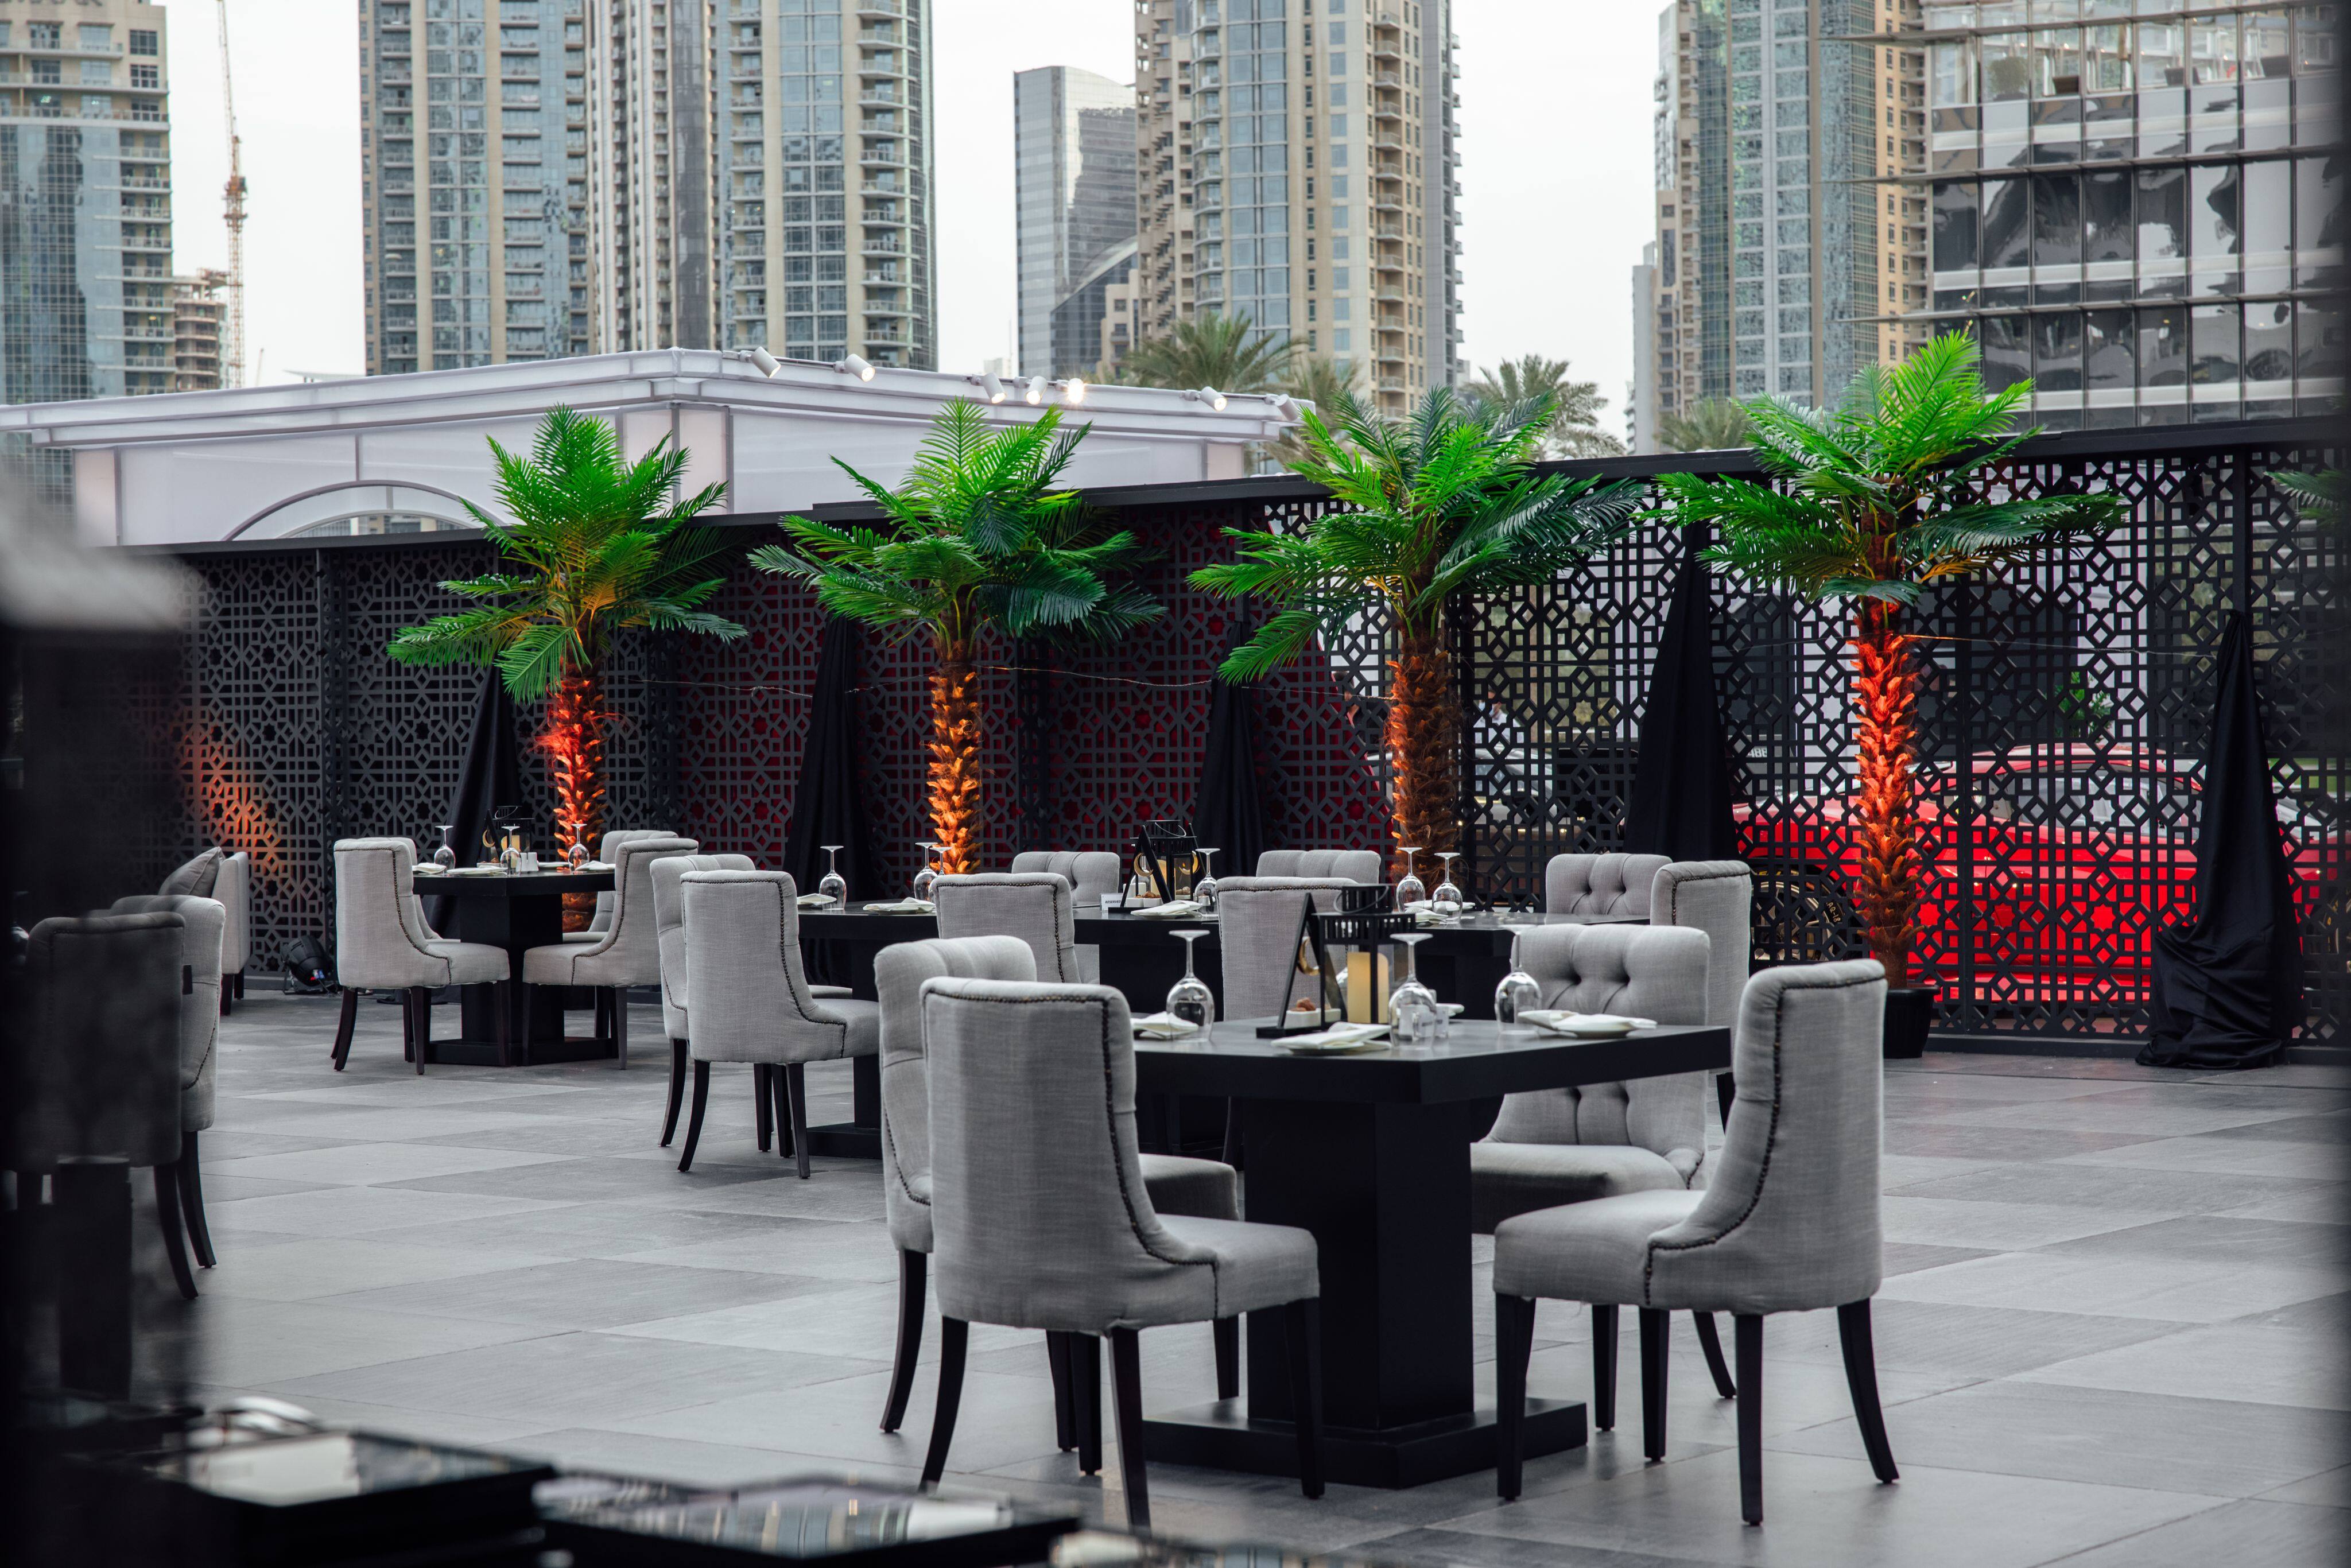 Armani Pavilion - Armani Hotel Dubai, Downtown Dubai, Dubai | Zomato